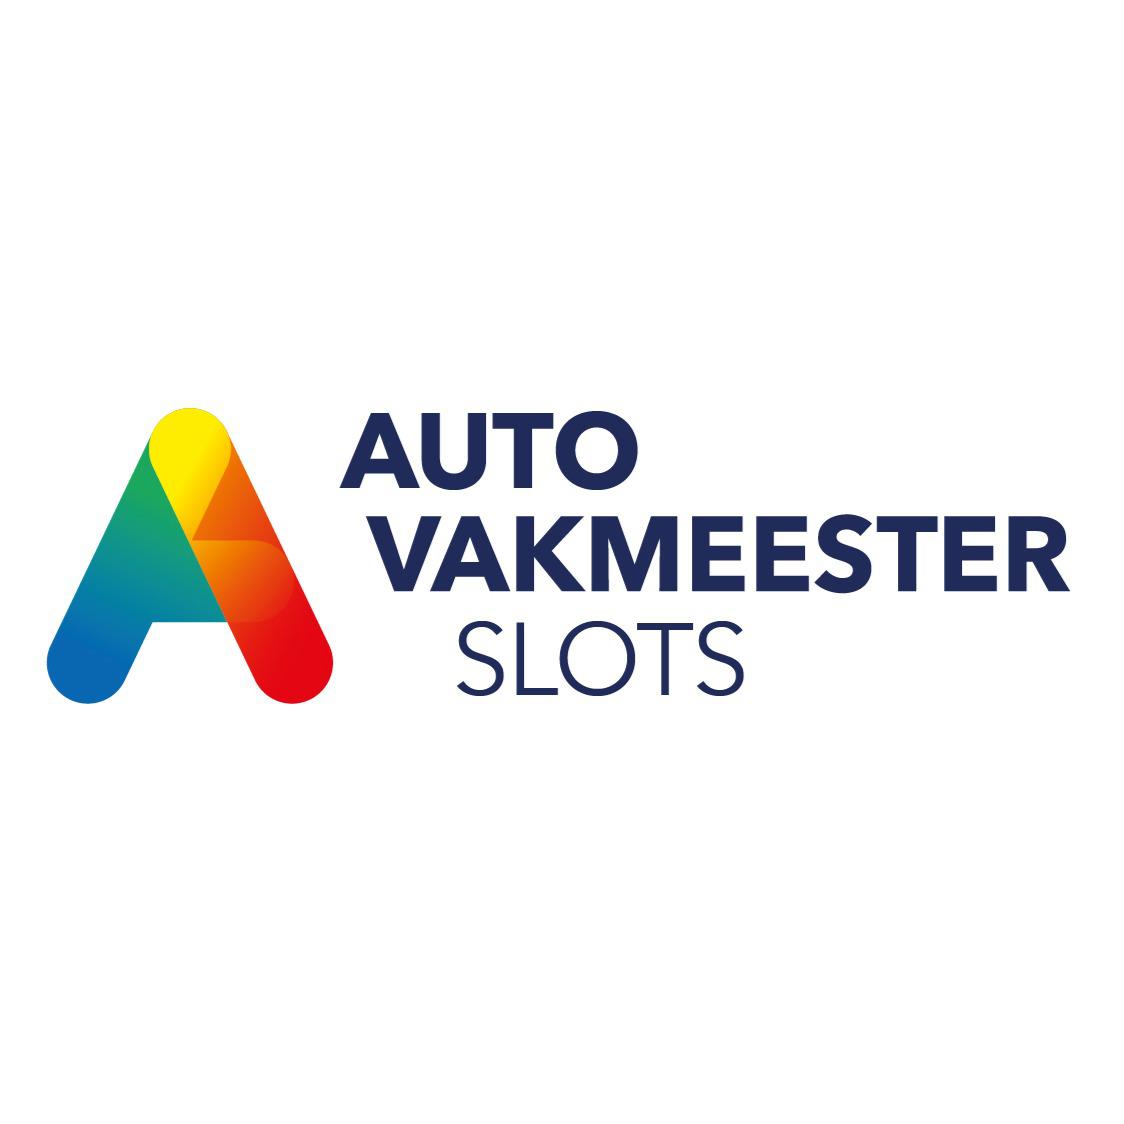 Autobedrijf Slots | Autovakmeester Logo